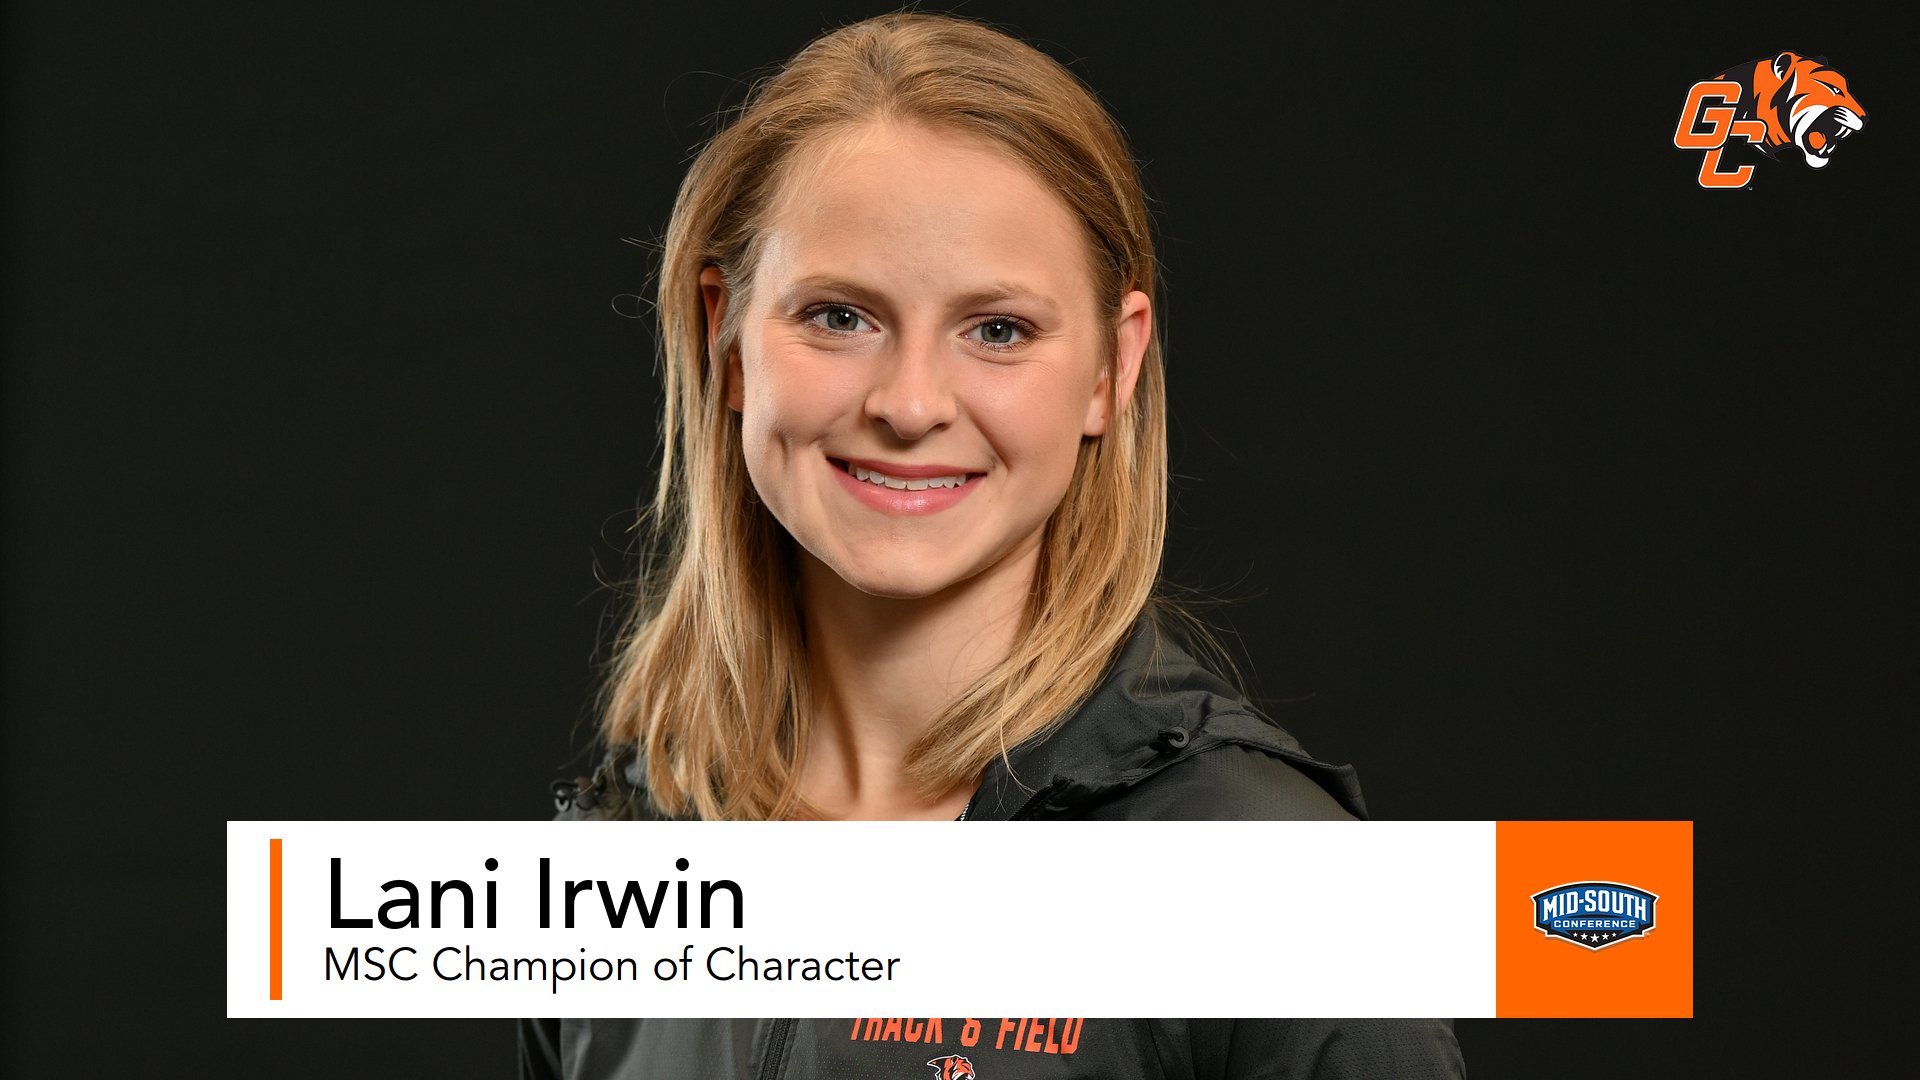 Lani Irwin named MSC Champion of Character